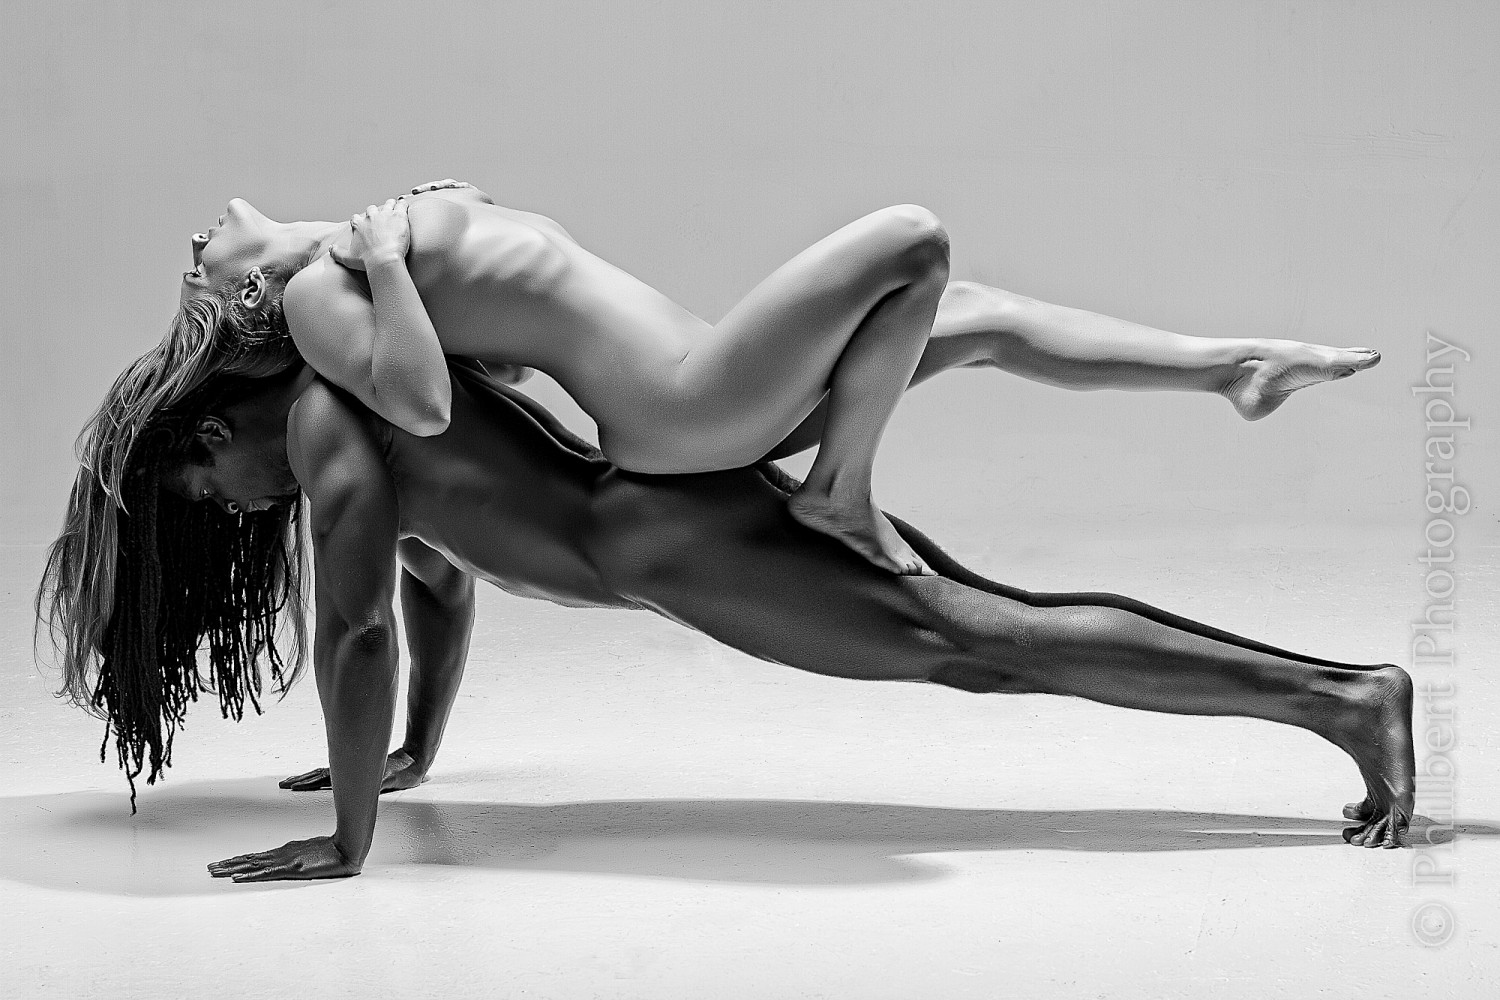 40+ Fine Art Nude Photos that Celebrate All Body Types (NSFW)